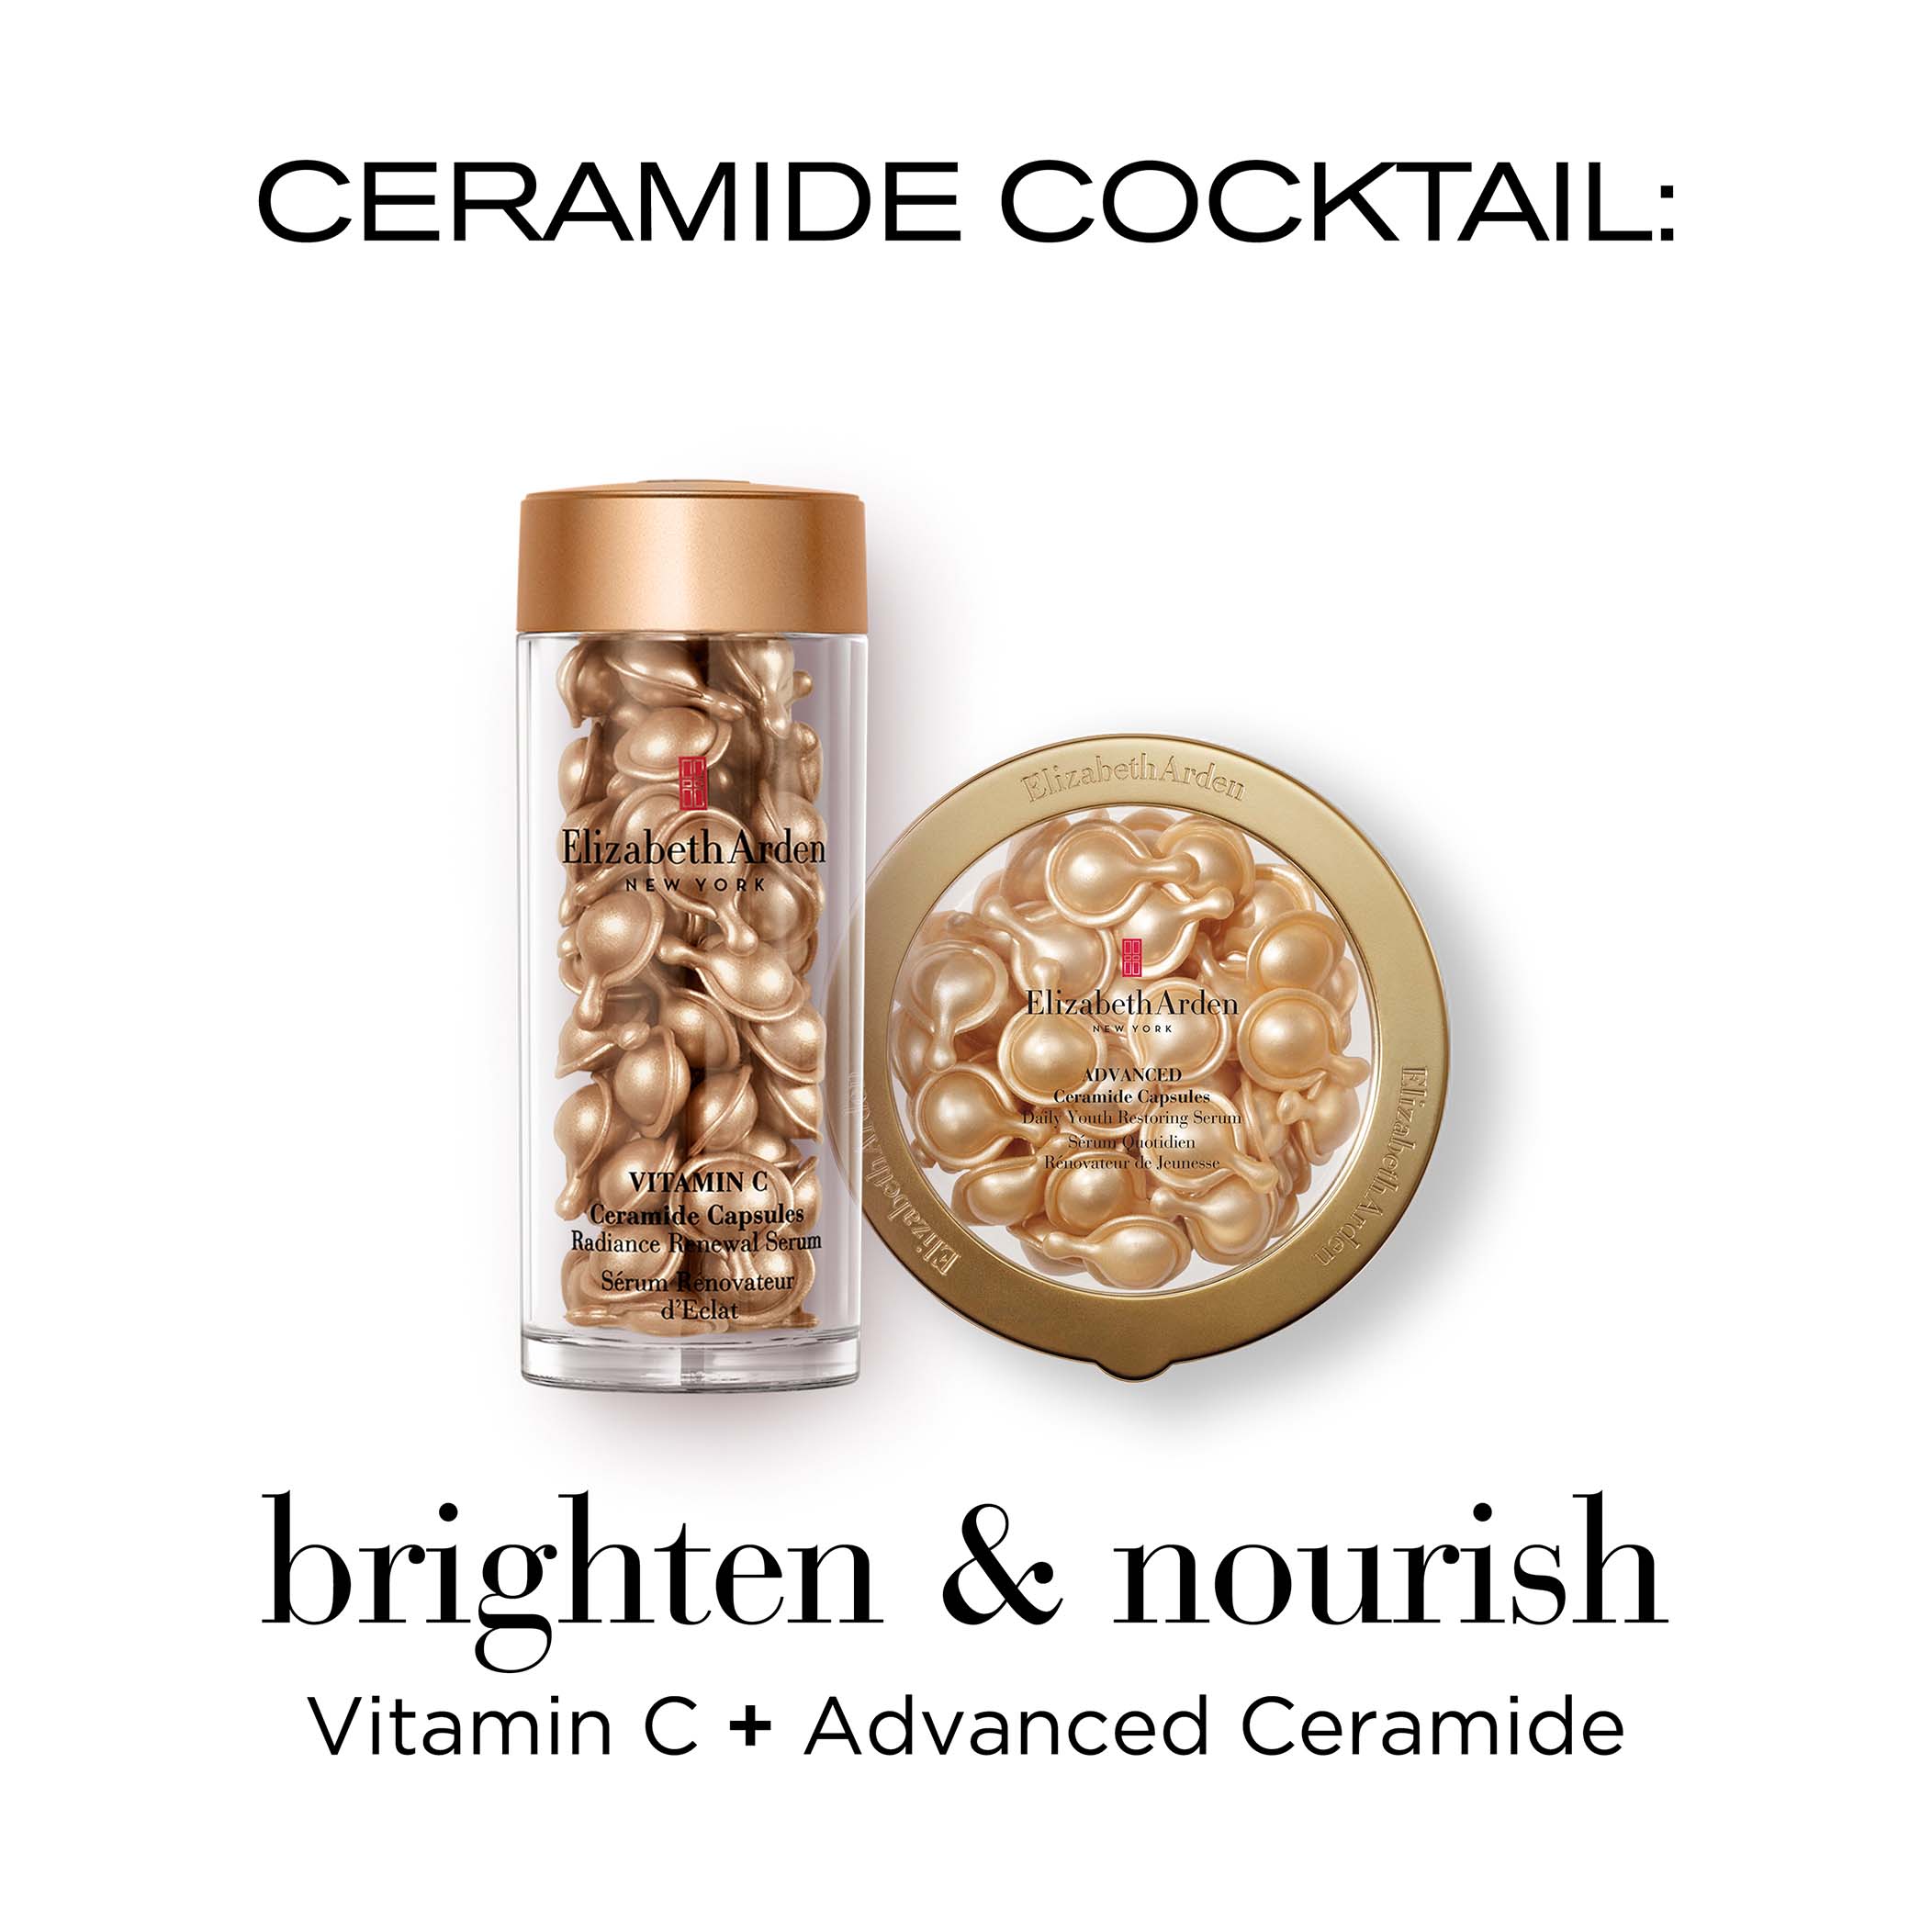 Brighten and nourish with Vitamin C and Advanced Ceramide Capsules